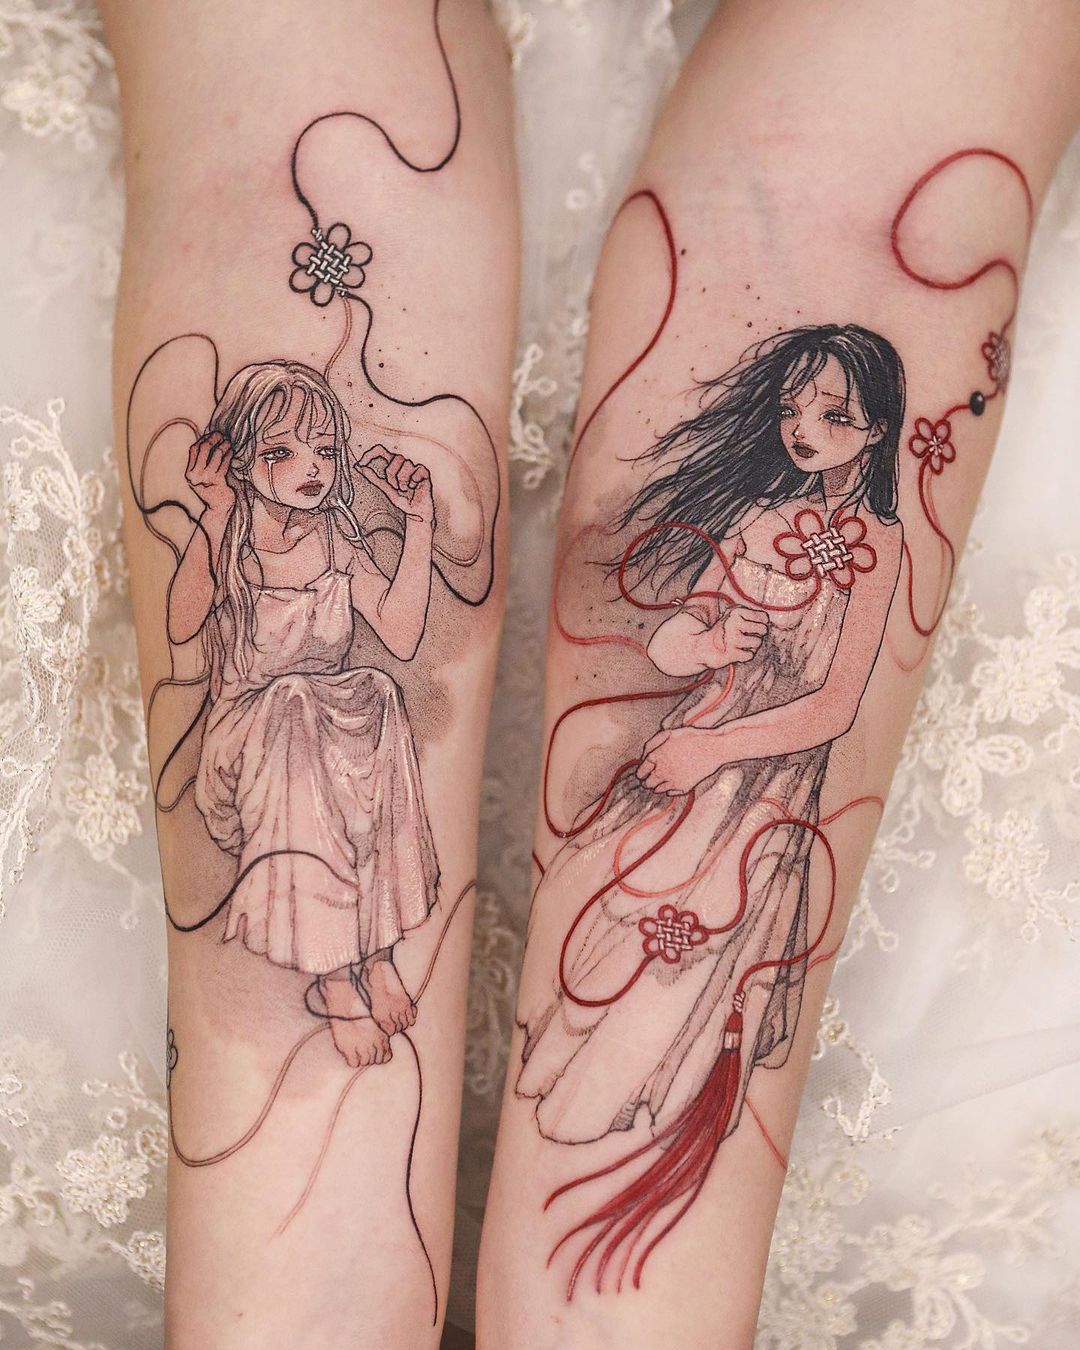 tattooist_sion/Instagram